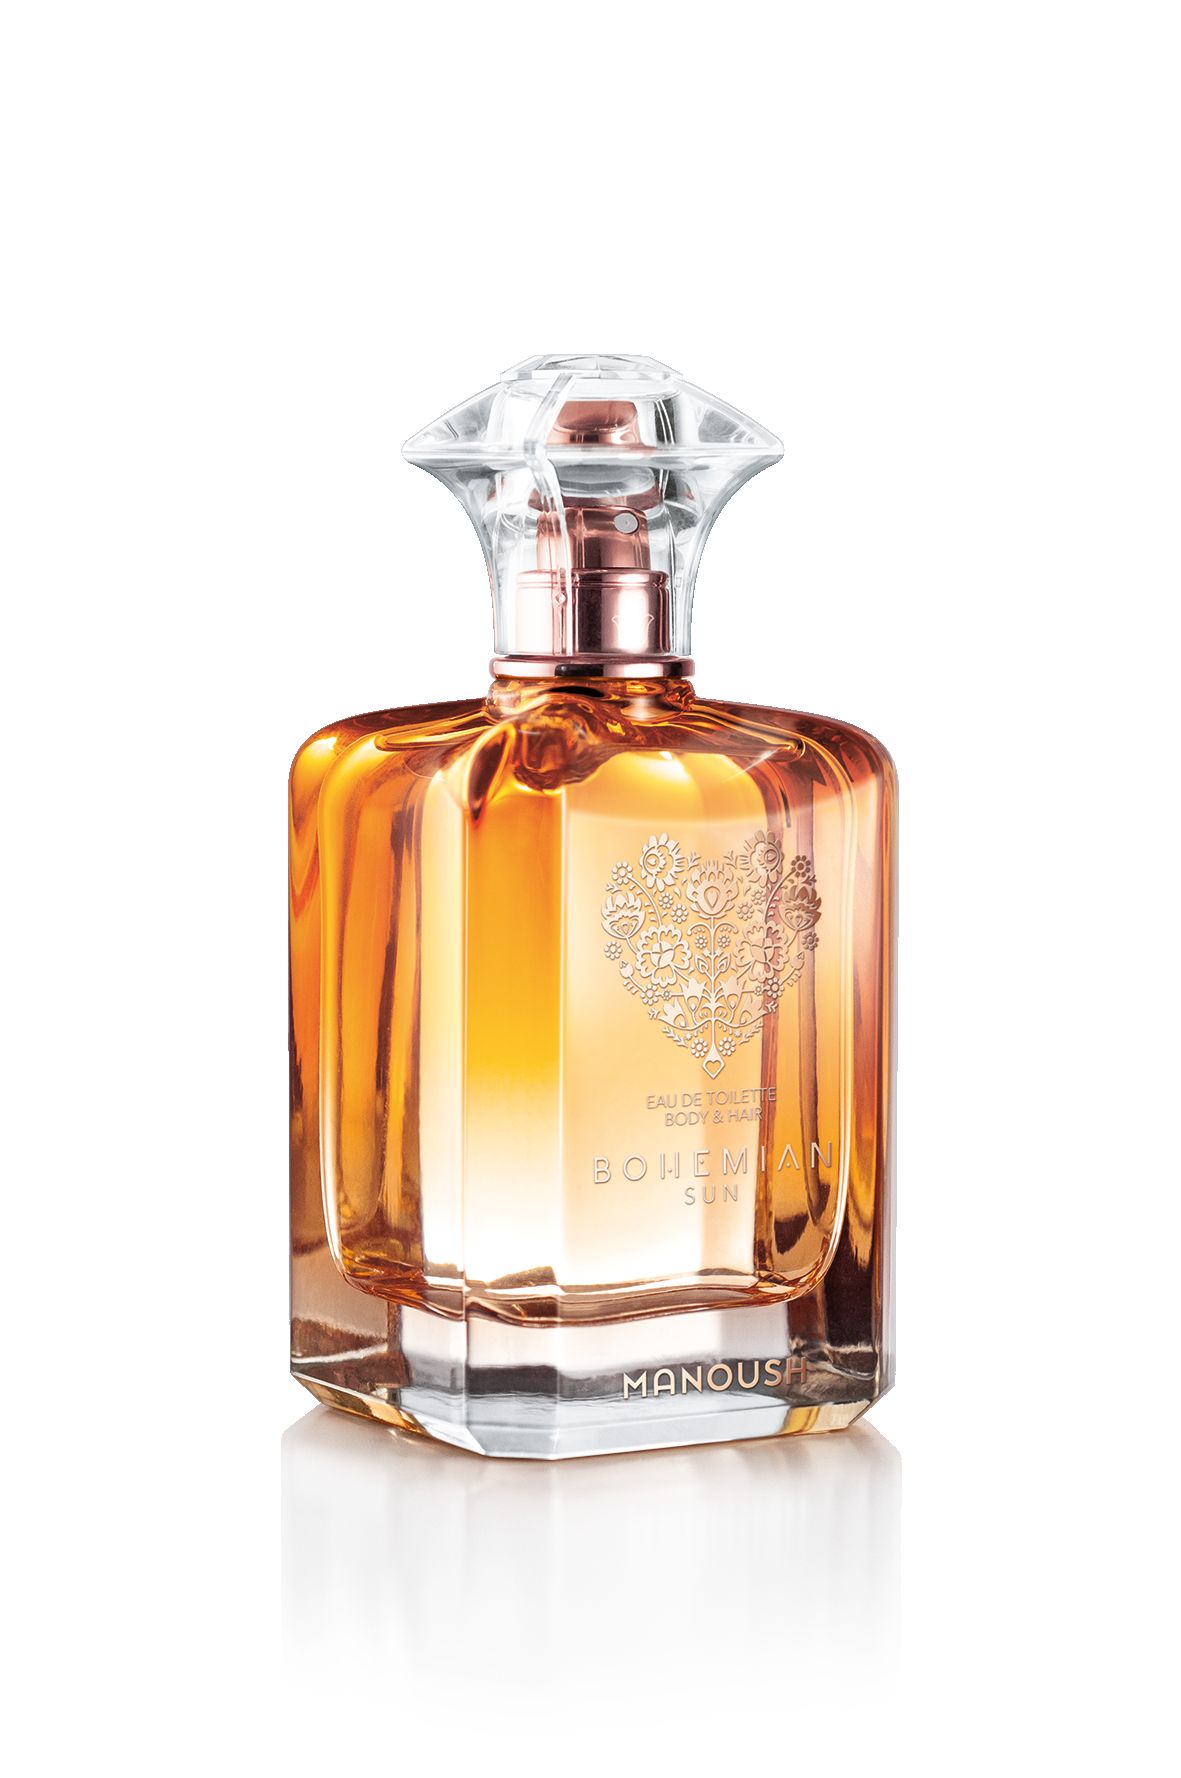 Bohemian Sun Manoush perfume - a fragrance for women 2021